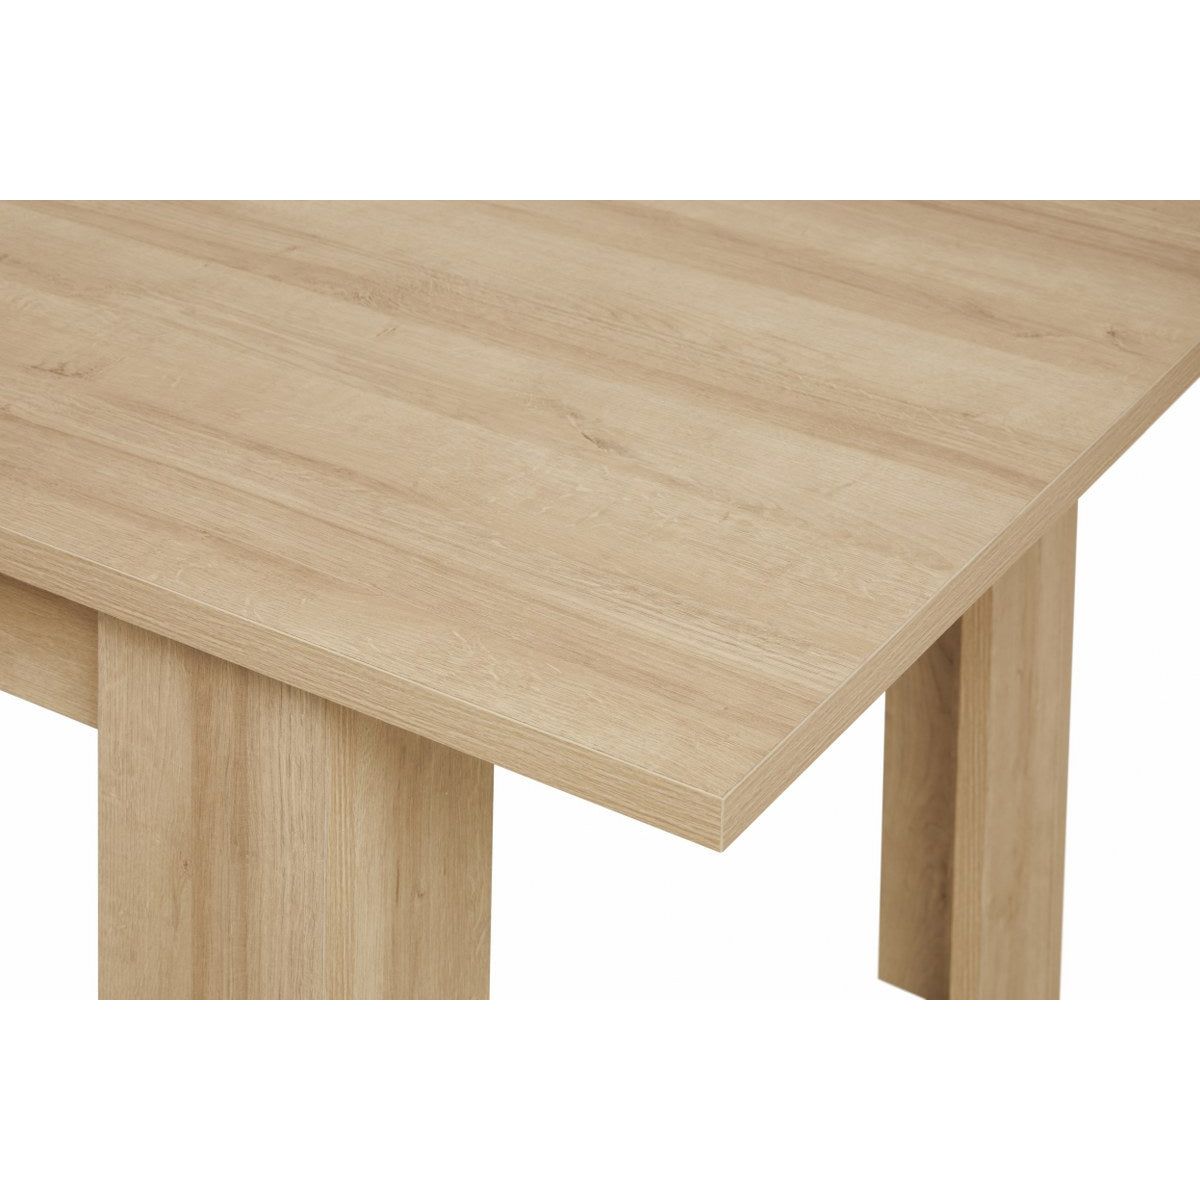 Dining table | Furniture series Ariya | brown, natural, light gray |